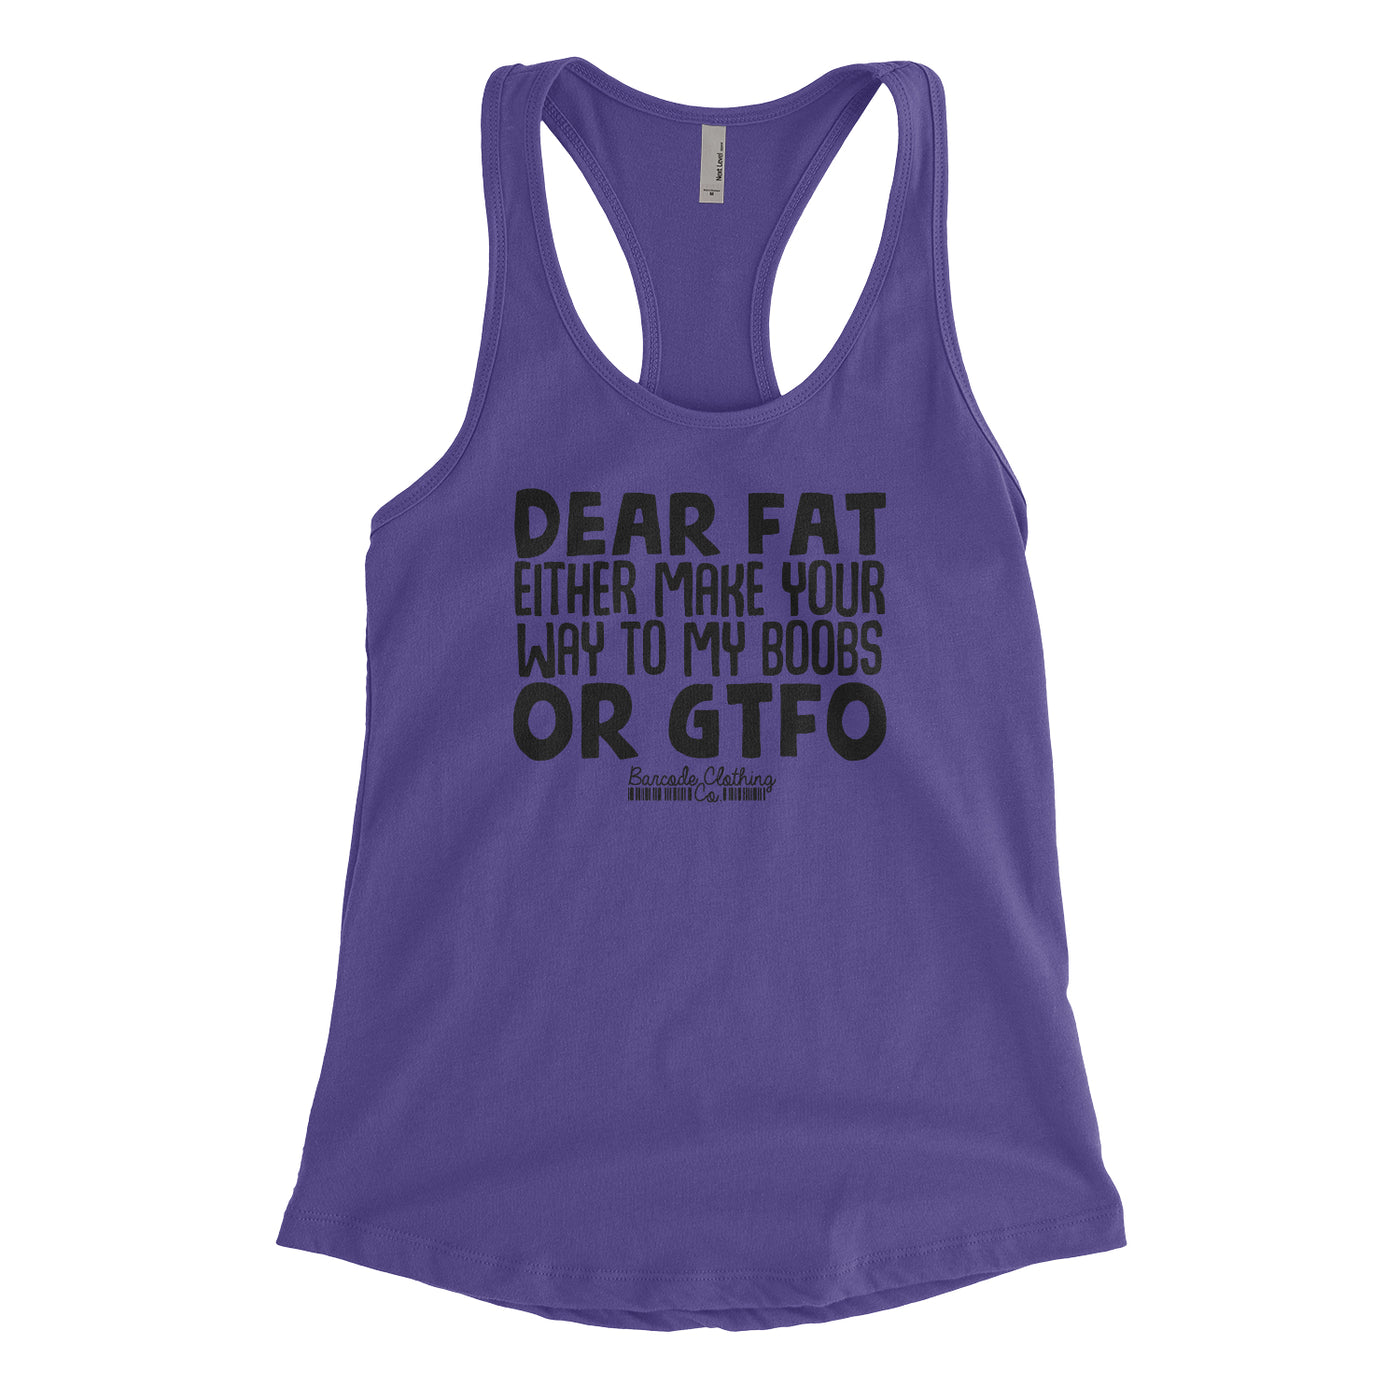 Dear Fat GTFO Blacked Out